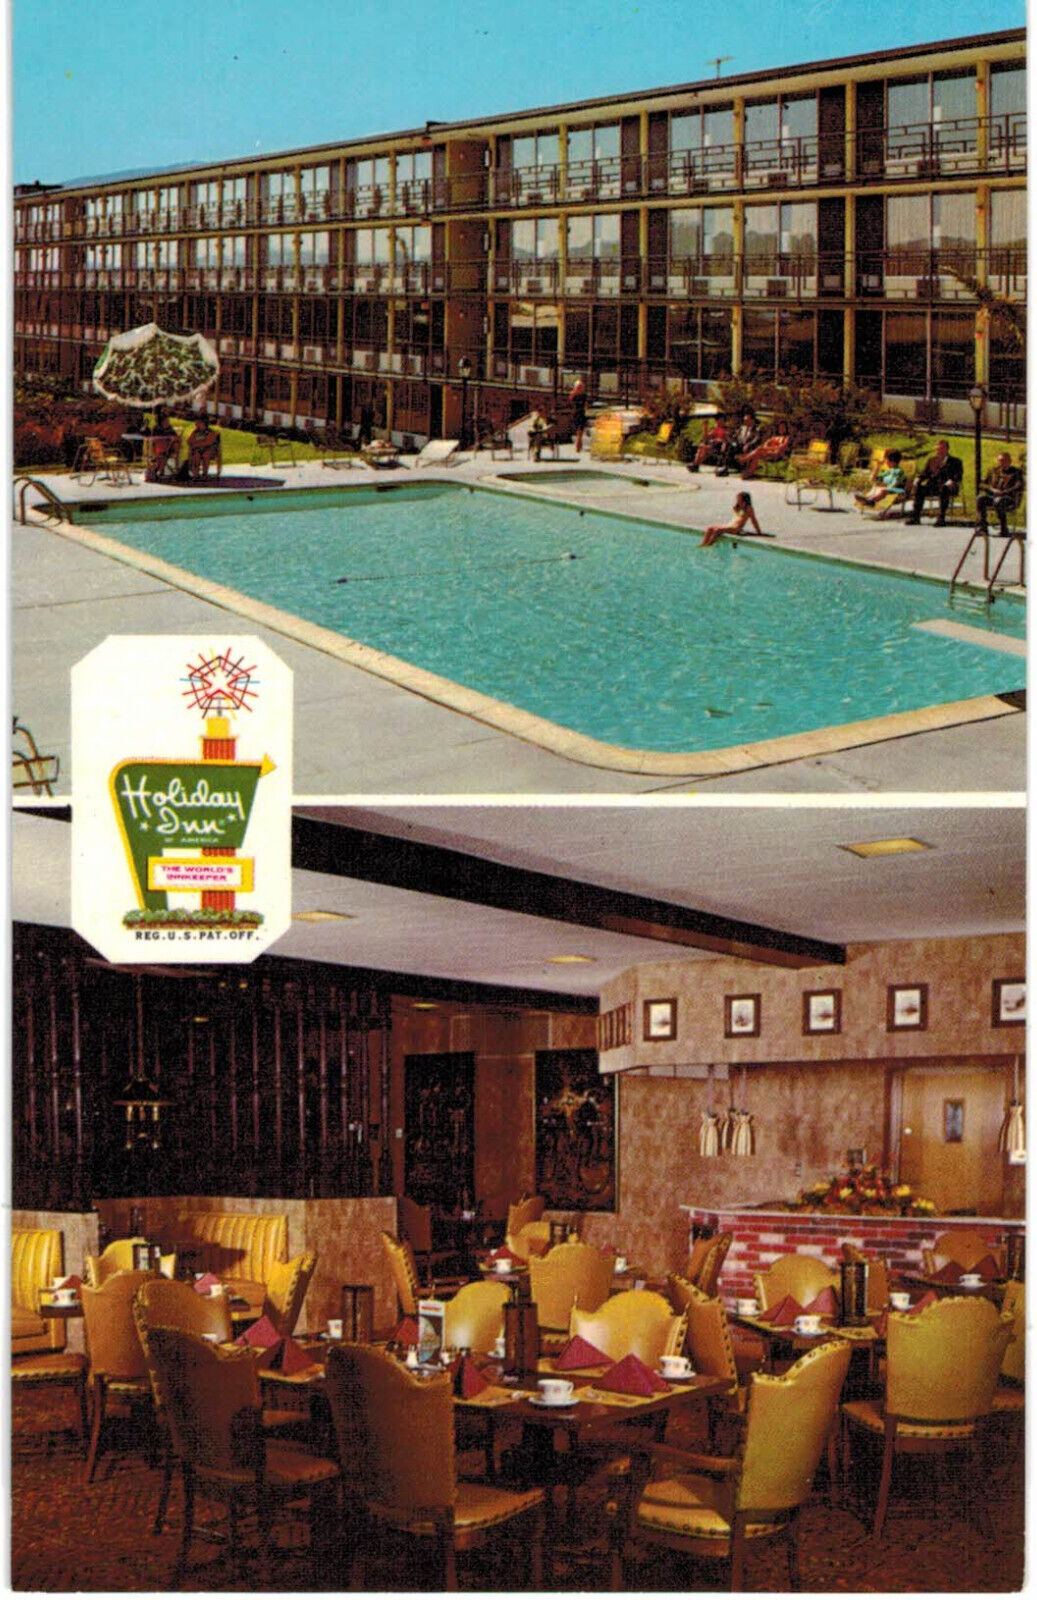 El Paso, Texas Holiday Inn 1960s Vintage Postcard - Poolside & Dining Room